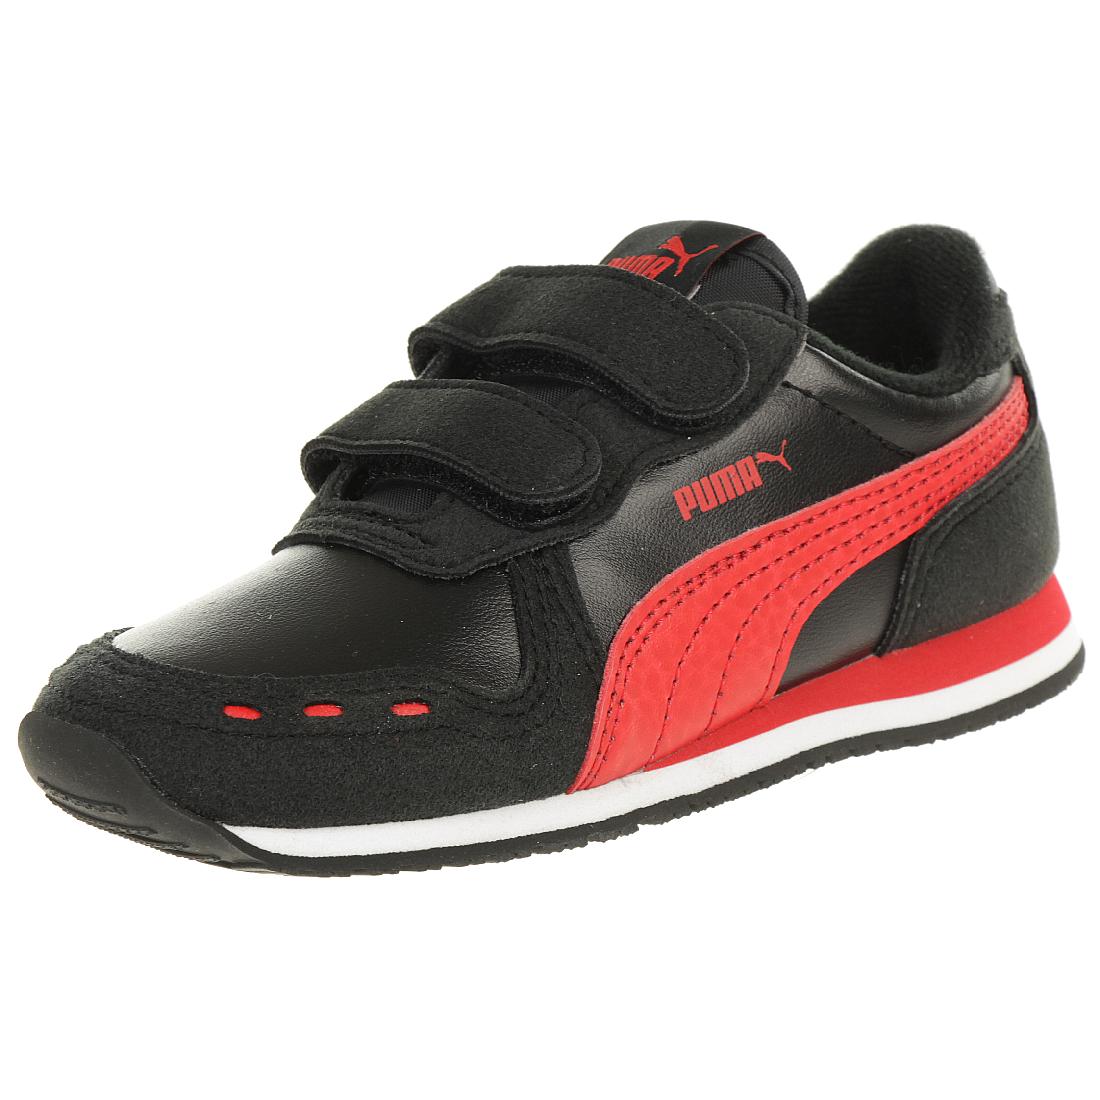 PUMA Cabana Racer SL V Inf Kinder Sneaker Klettverschluss schwarz 351980